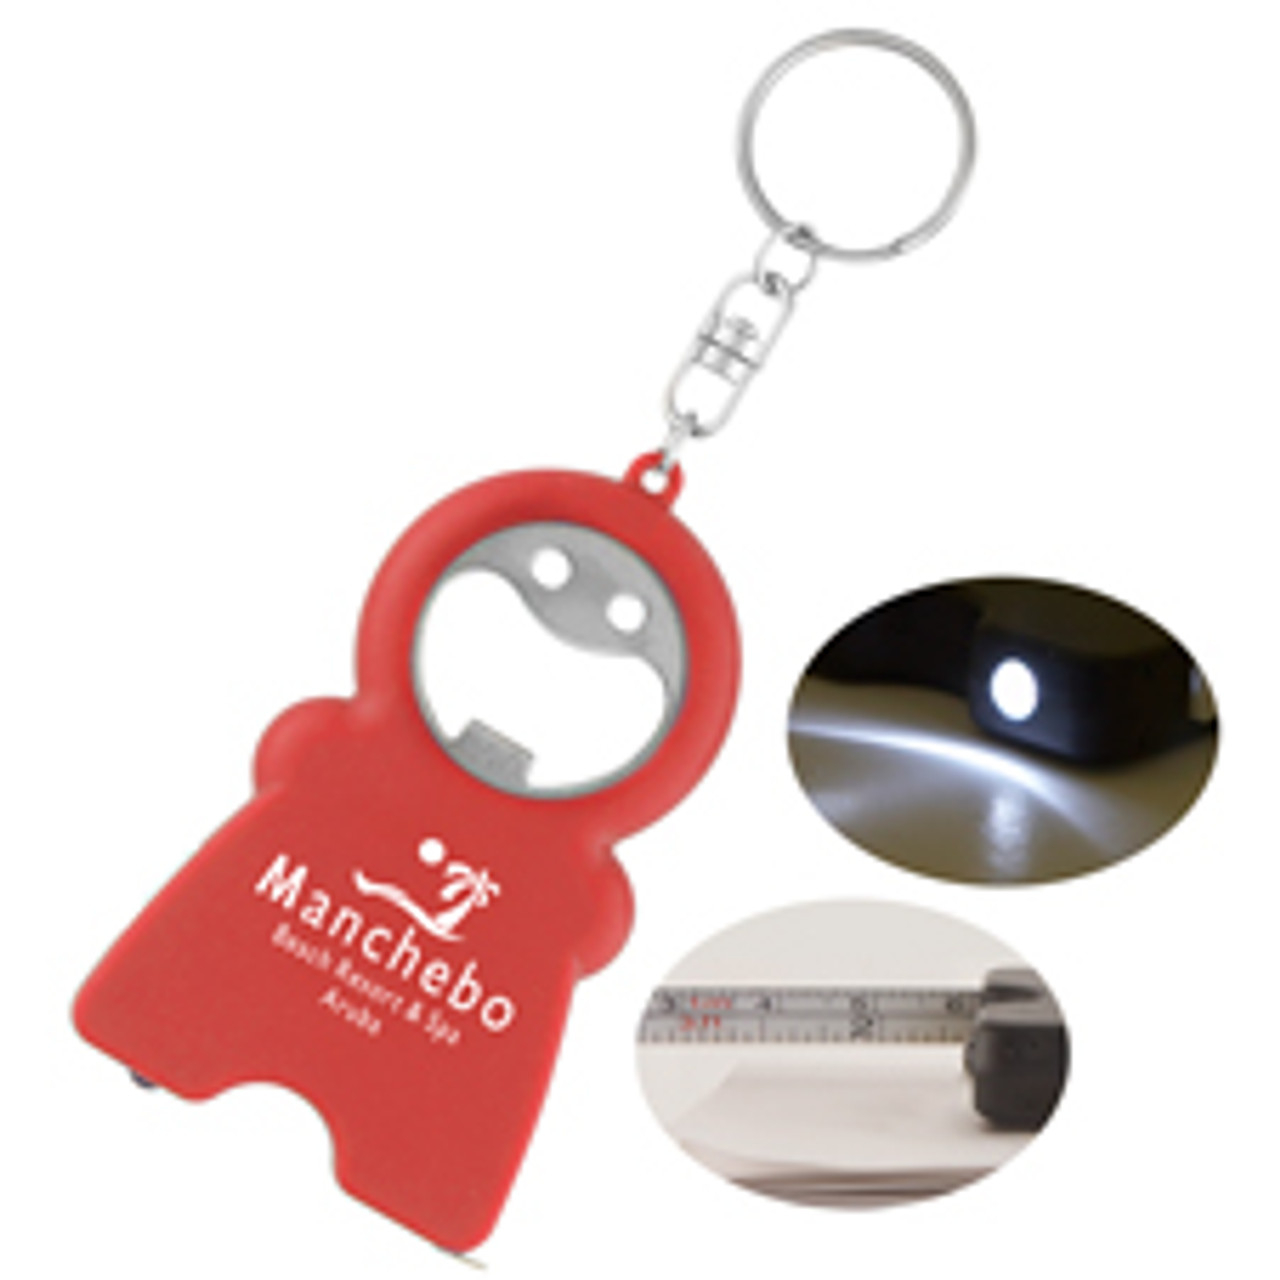 HandyMan Keychain  Promotional Trade Show Giveaways